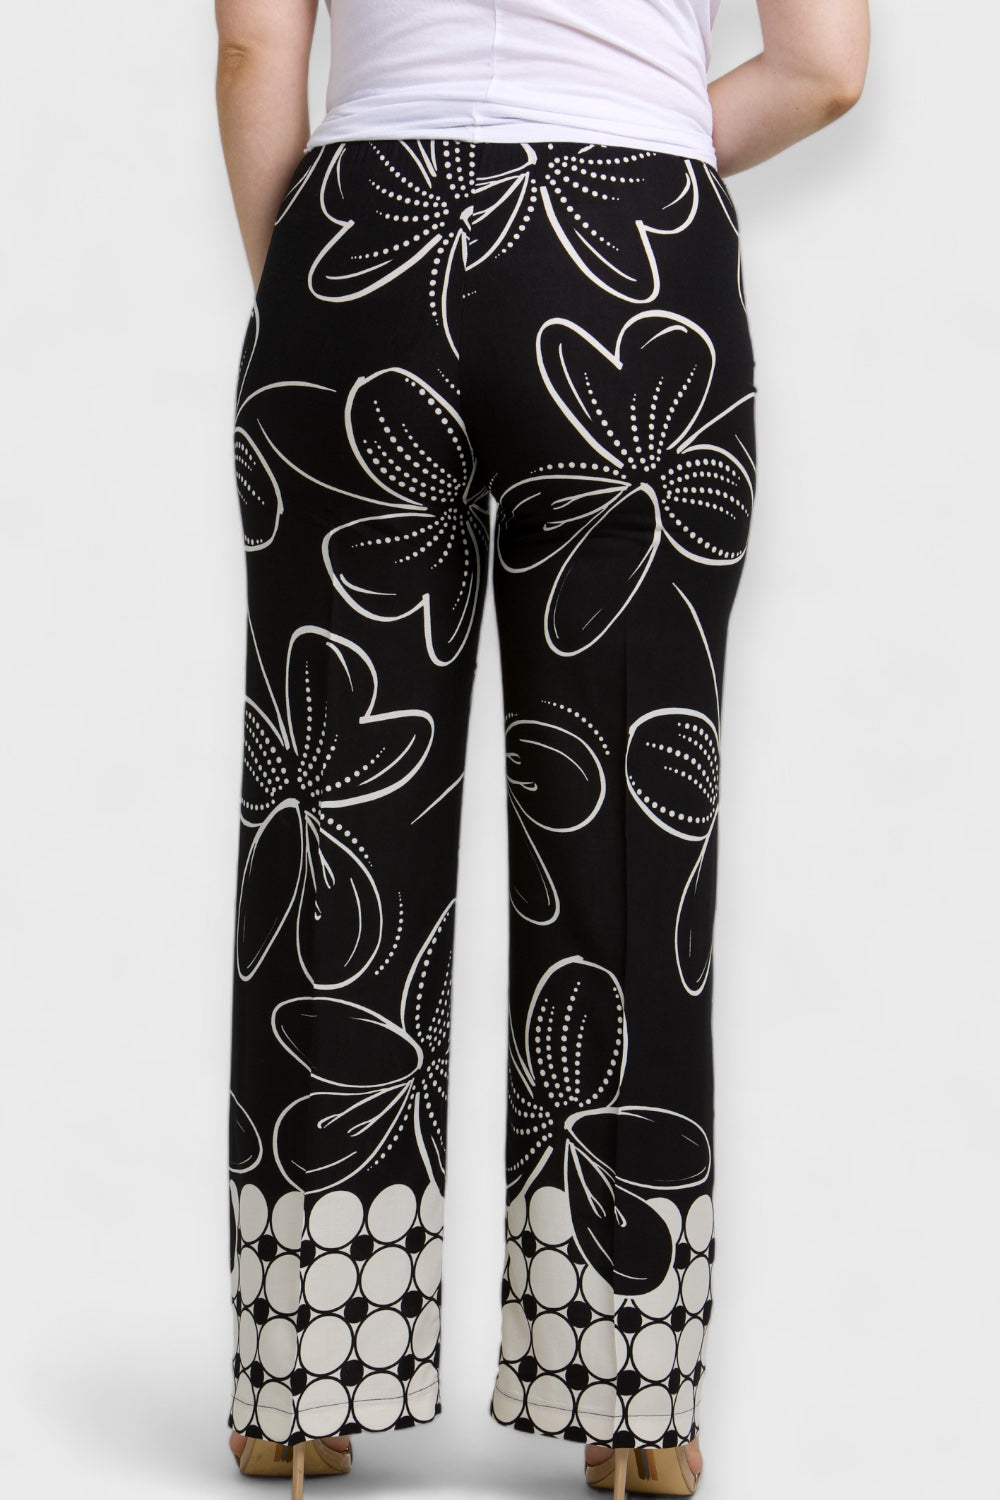 Ava Plus Size Black & White Floral Print Wide-Leg Pants by Oltretempo Italian Women's Clothing